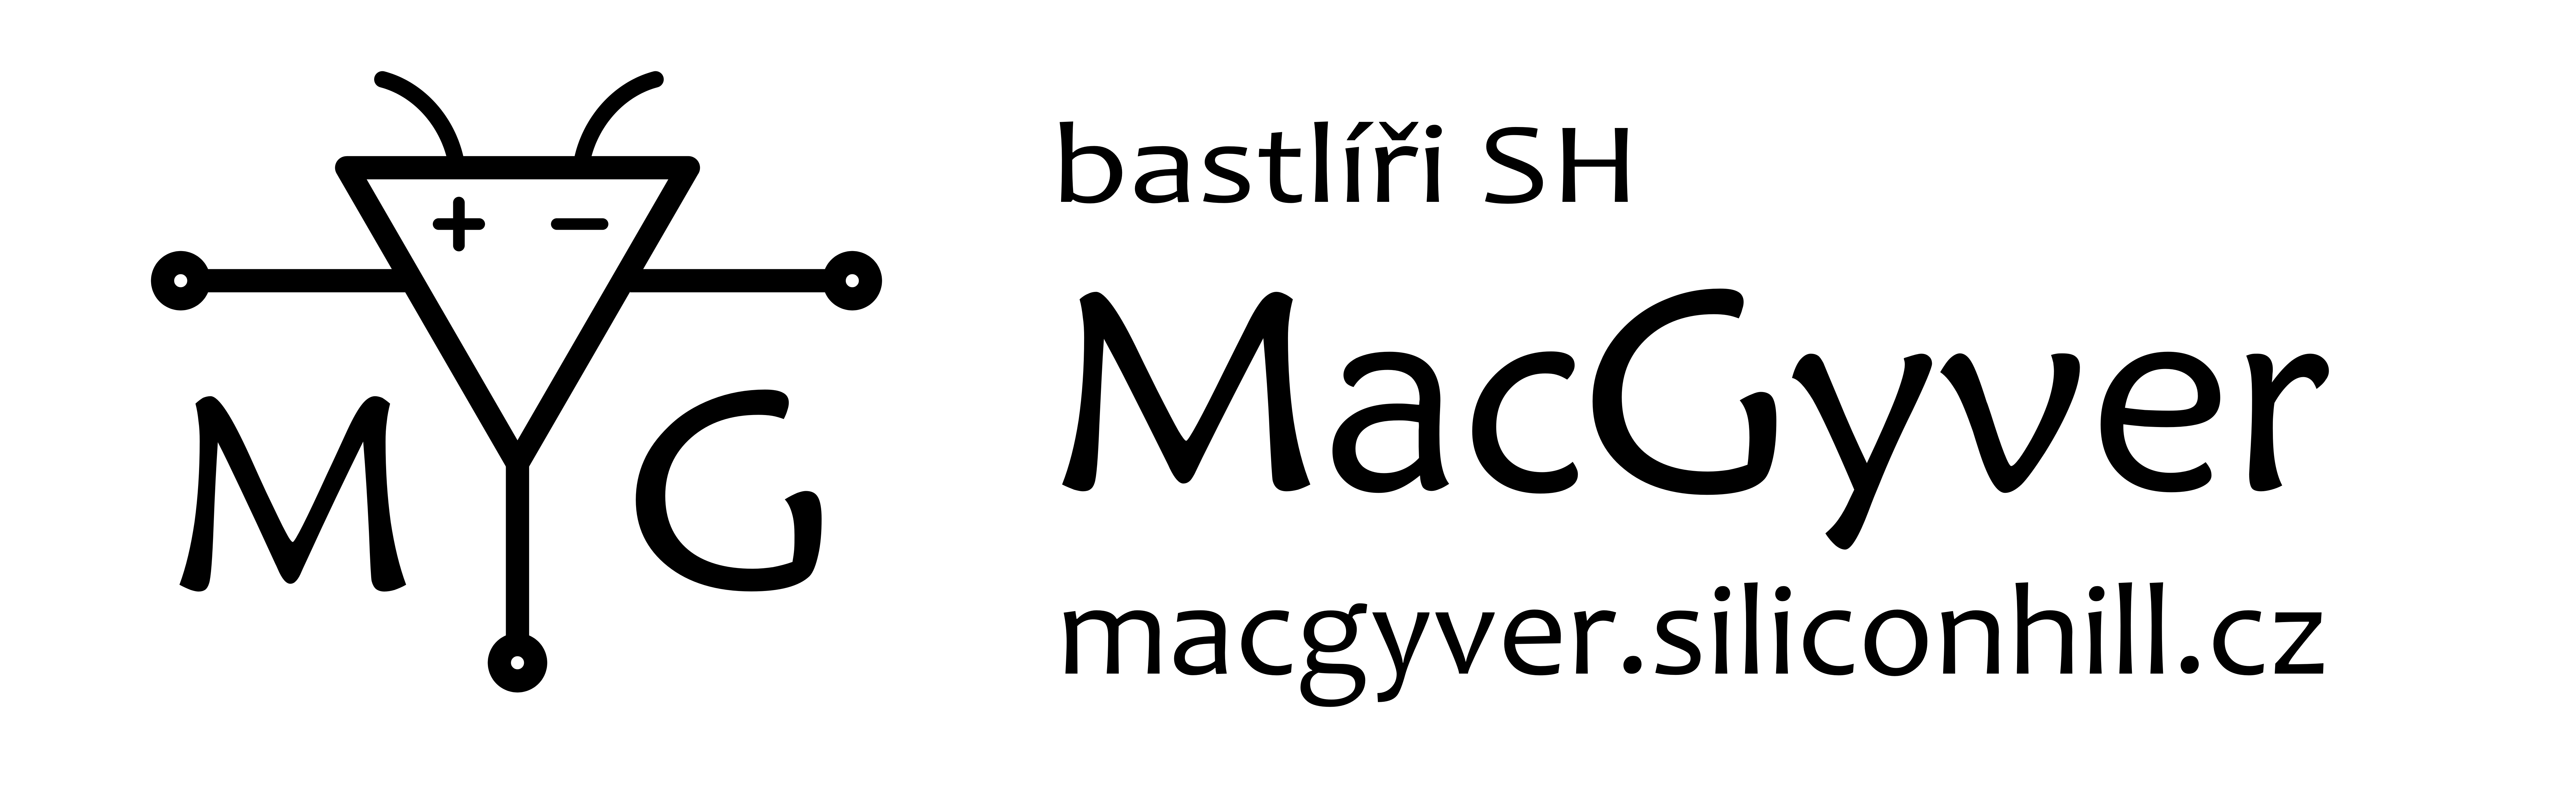 logo-silicon-hill-bastlirna-macgyver.png